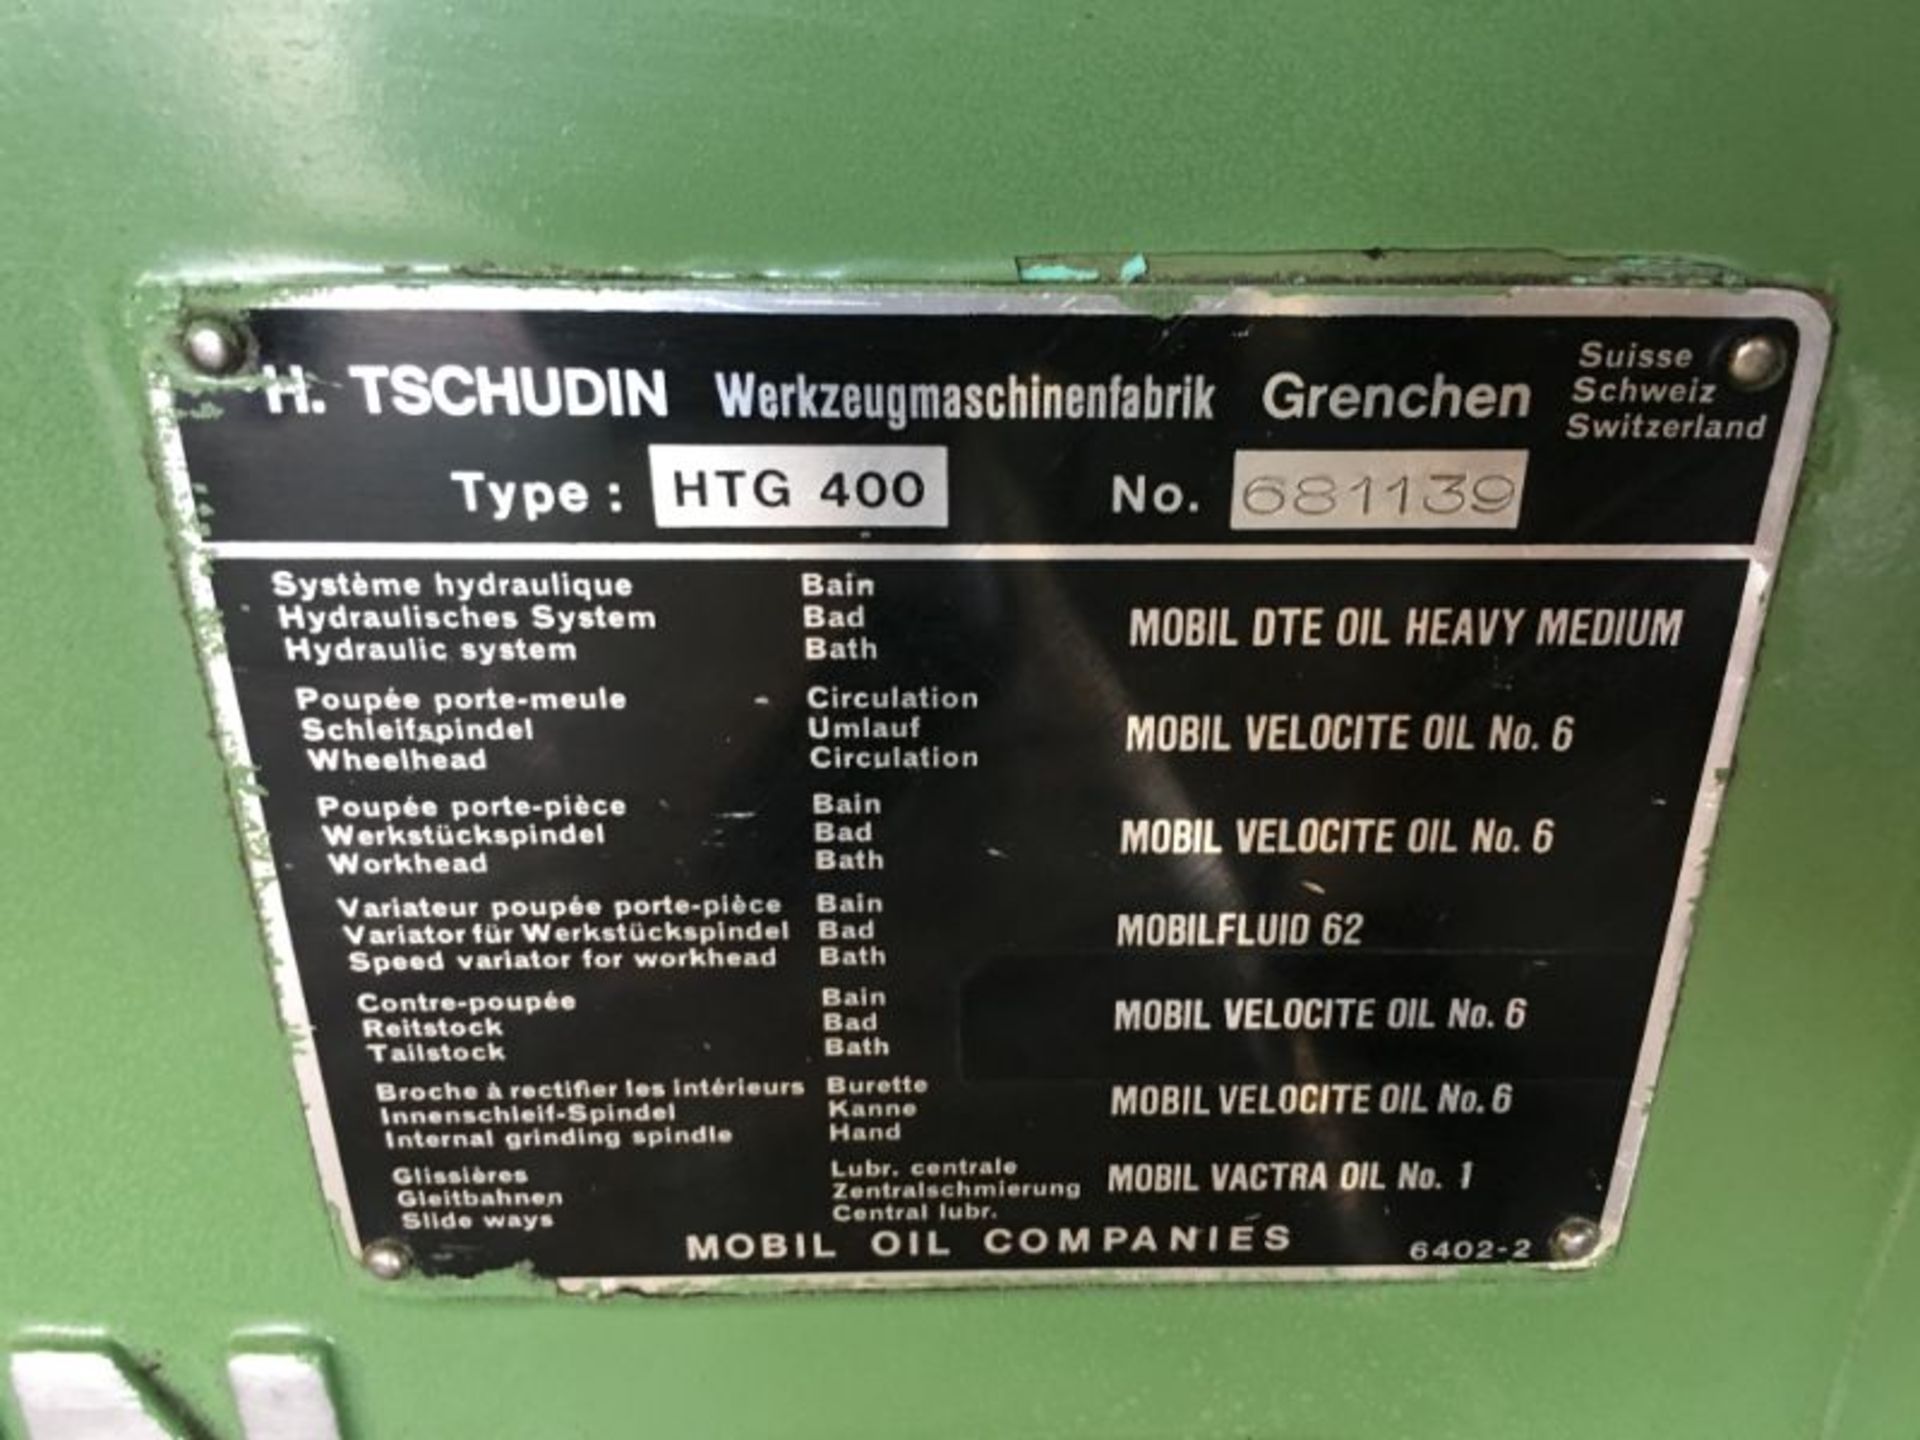 Tschudin HTG 400 Universal Cylindrical Grinder, 8” x 16” - Image 4 of 4